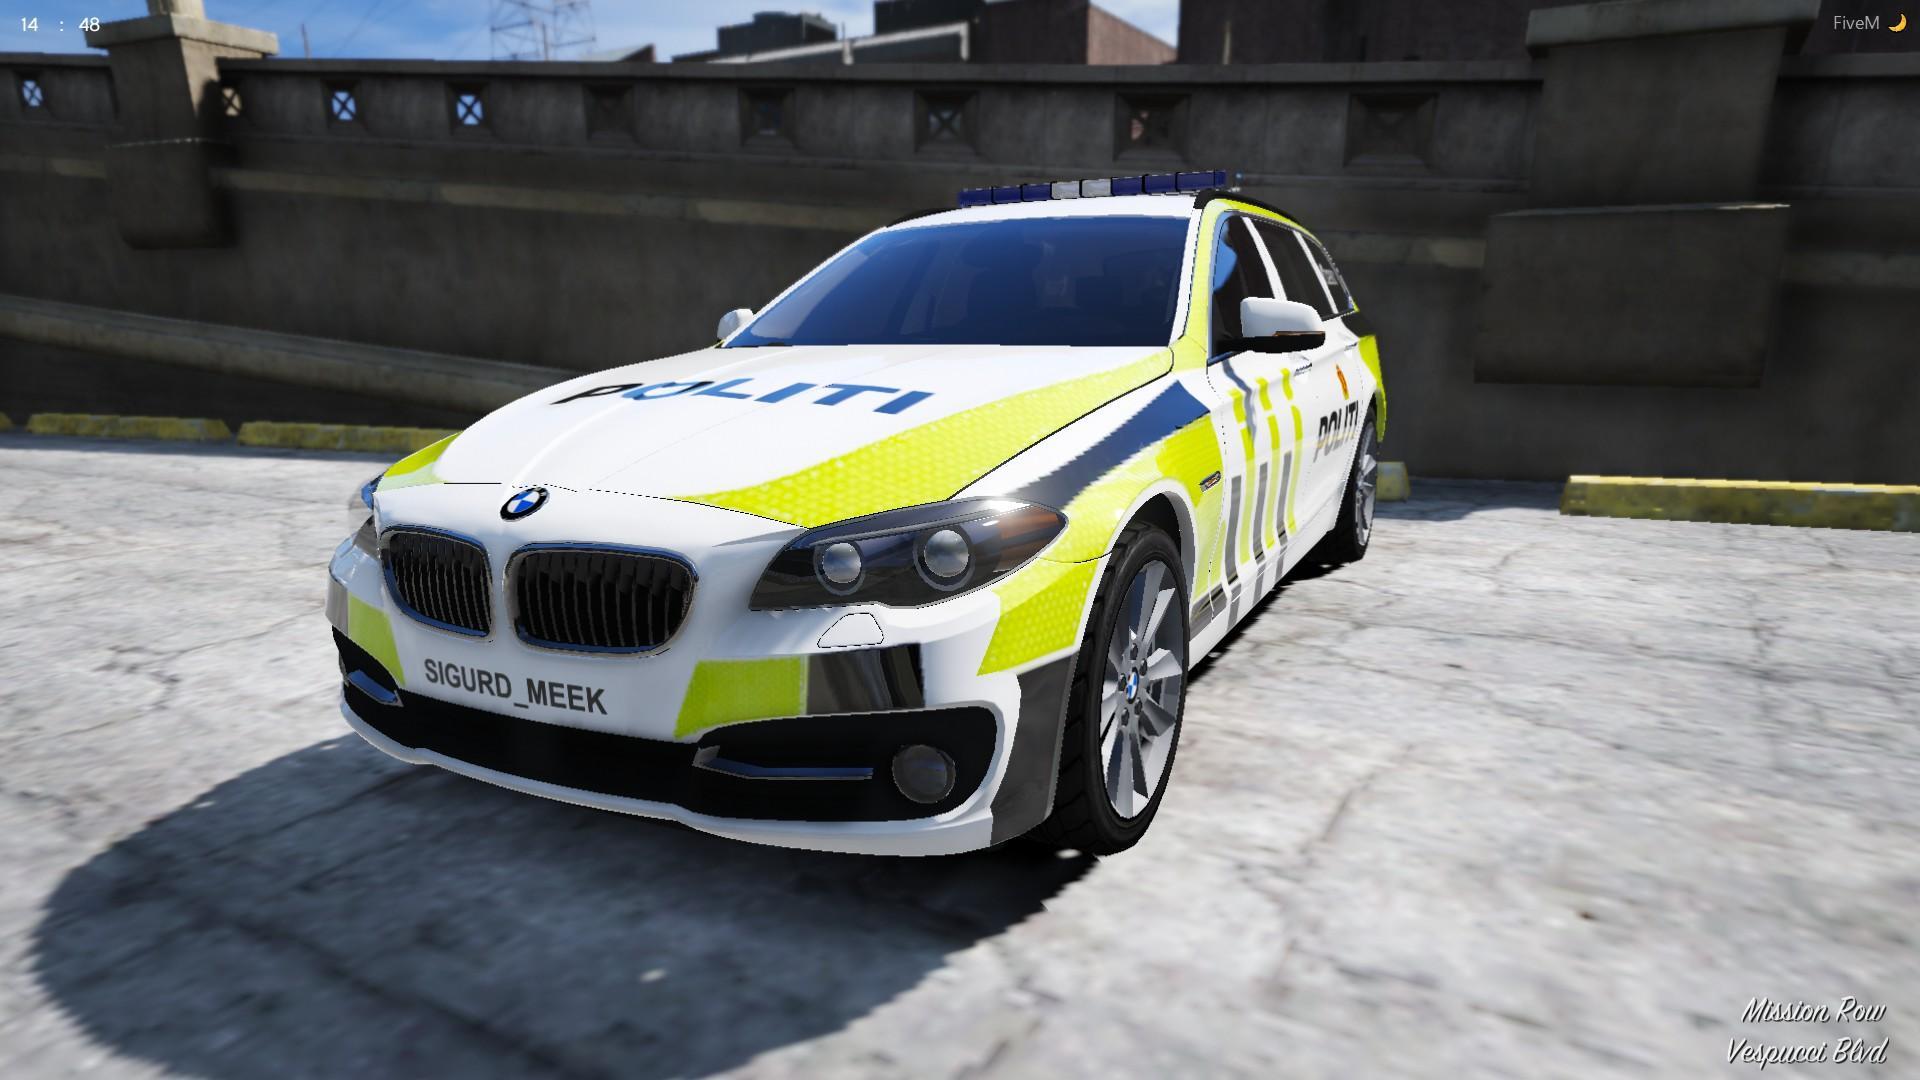 Norwegian BMW 530d police car // Norsk BMW 530d politibil